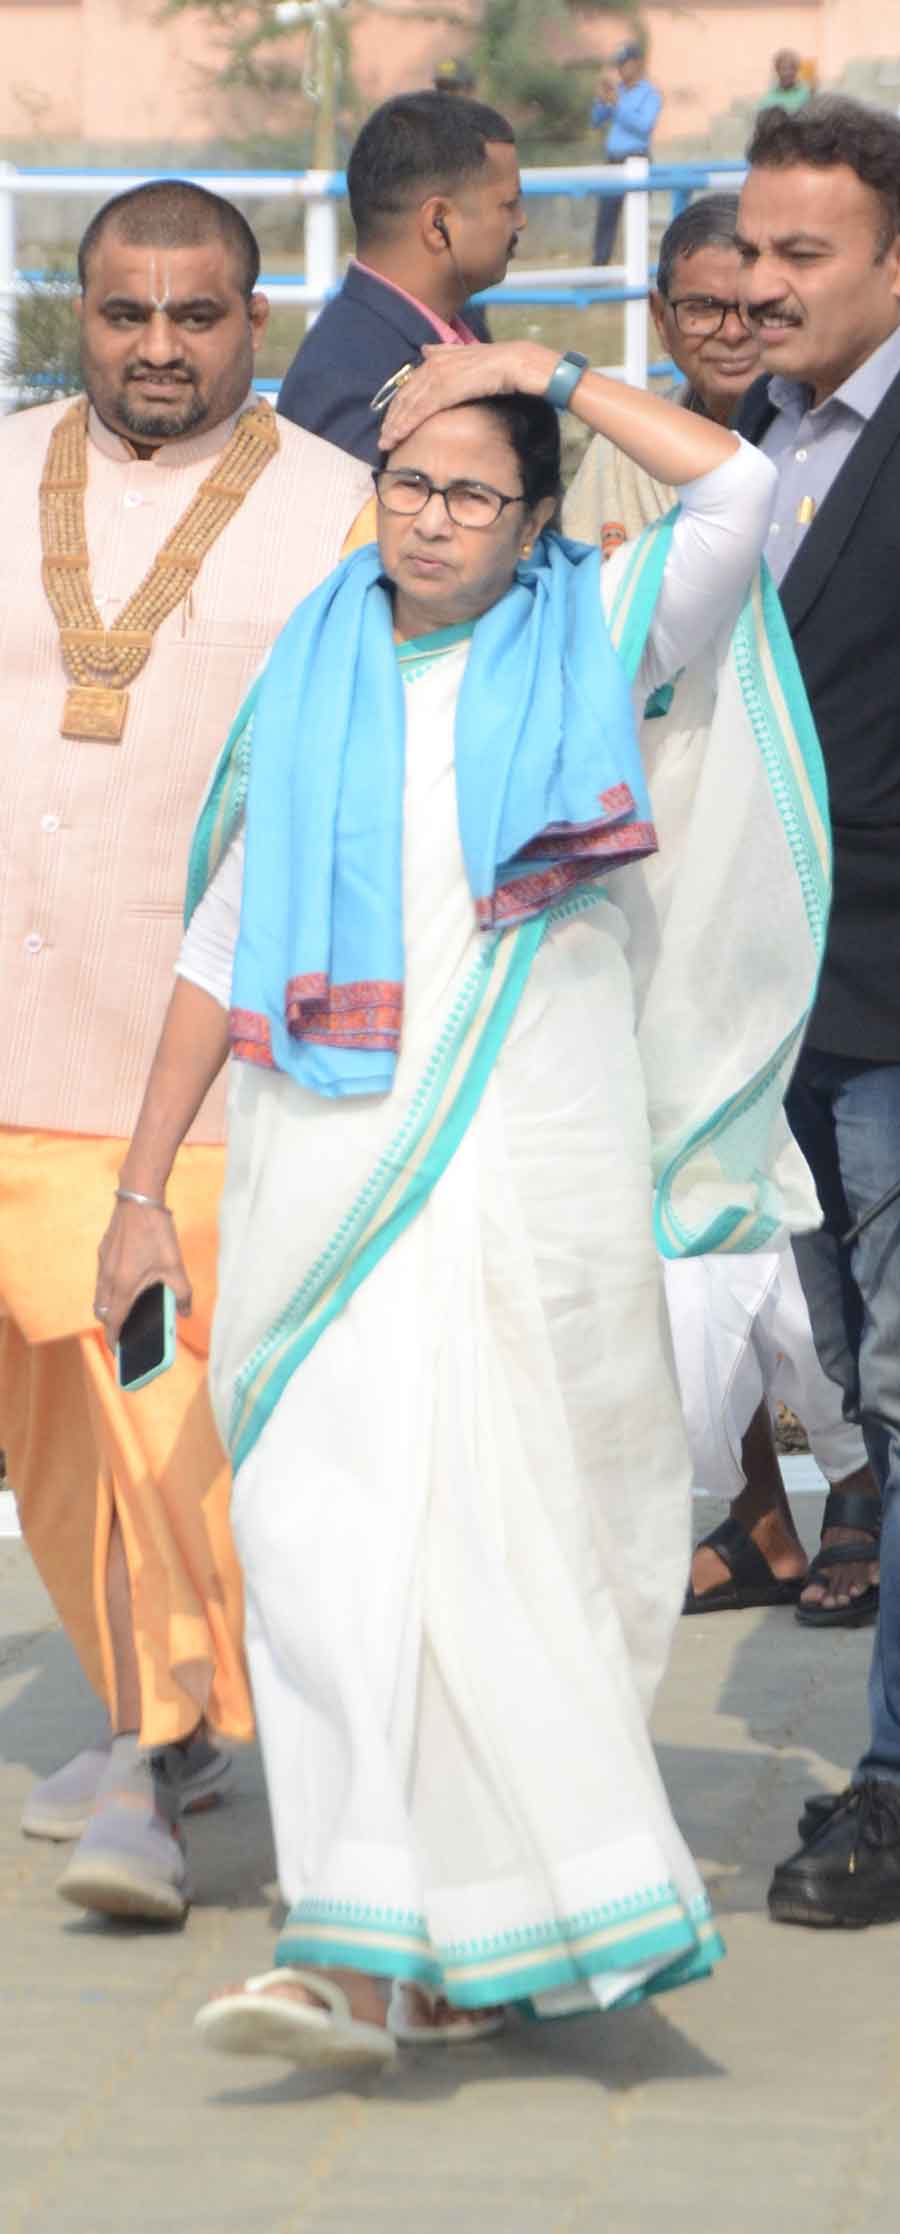 Chief minister Mamata Banerjee at a press meet in Gangasagar on Thursday